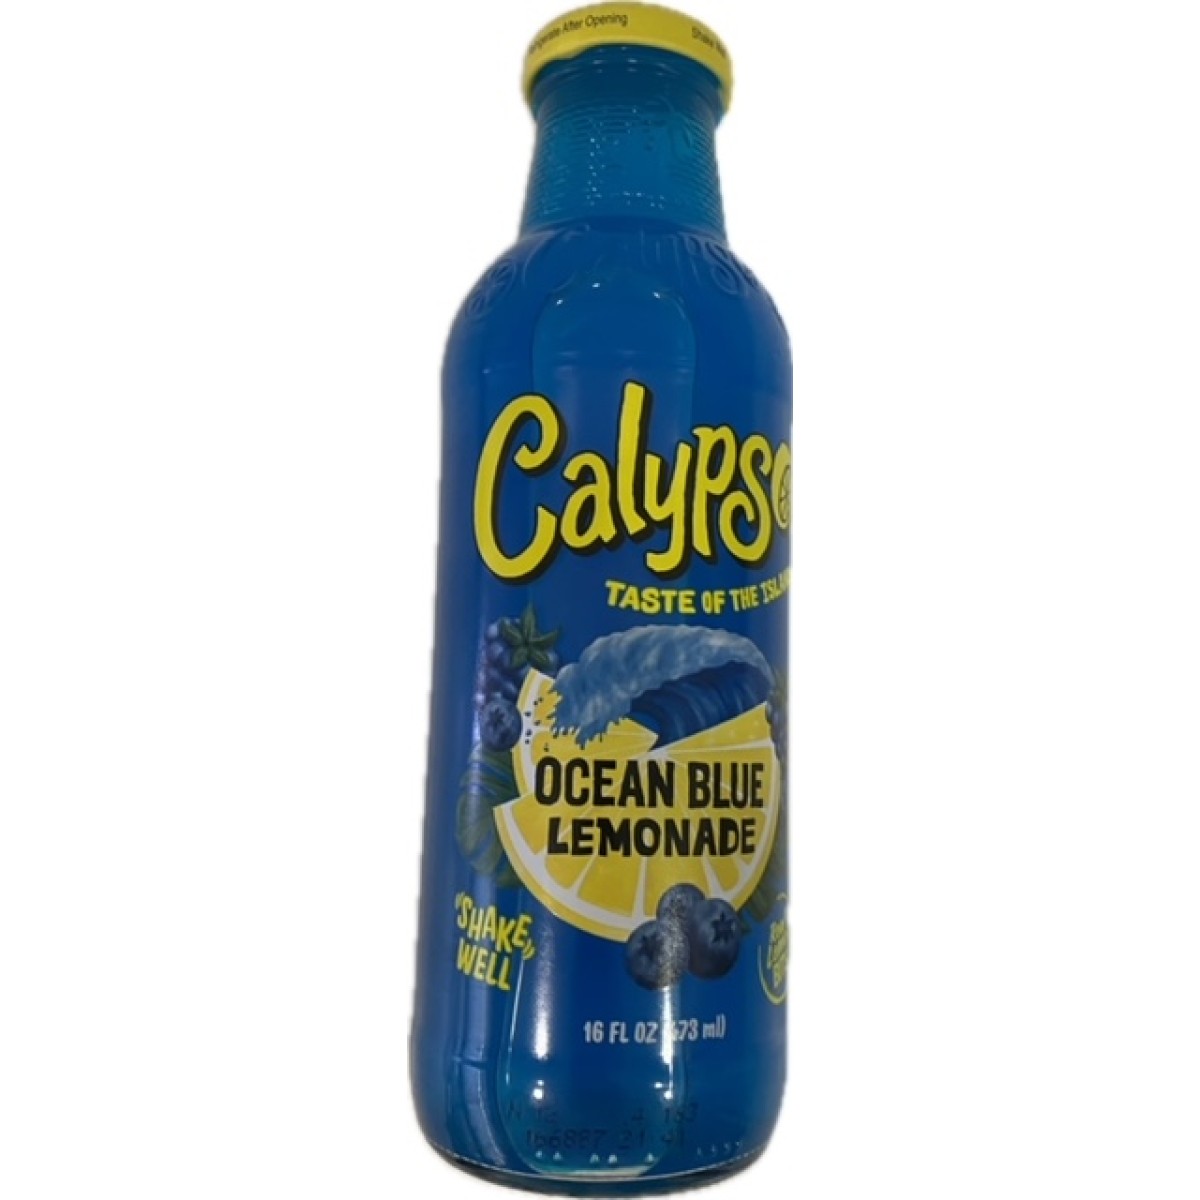 Calypso ocean blue